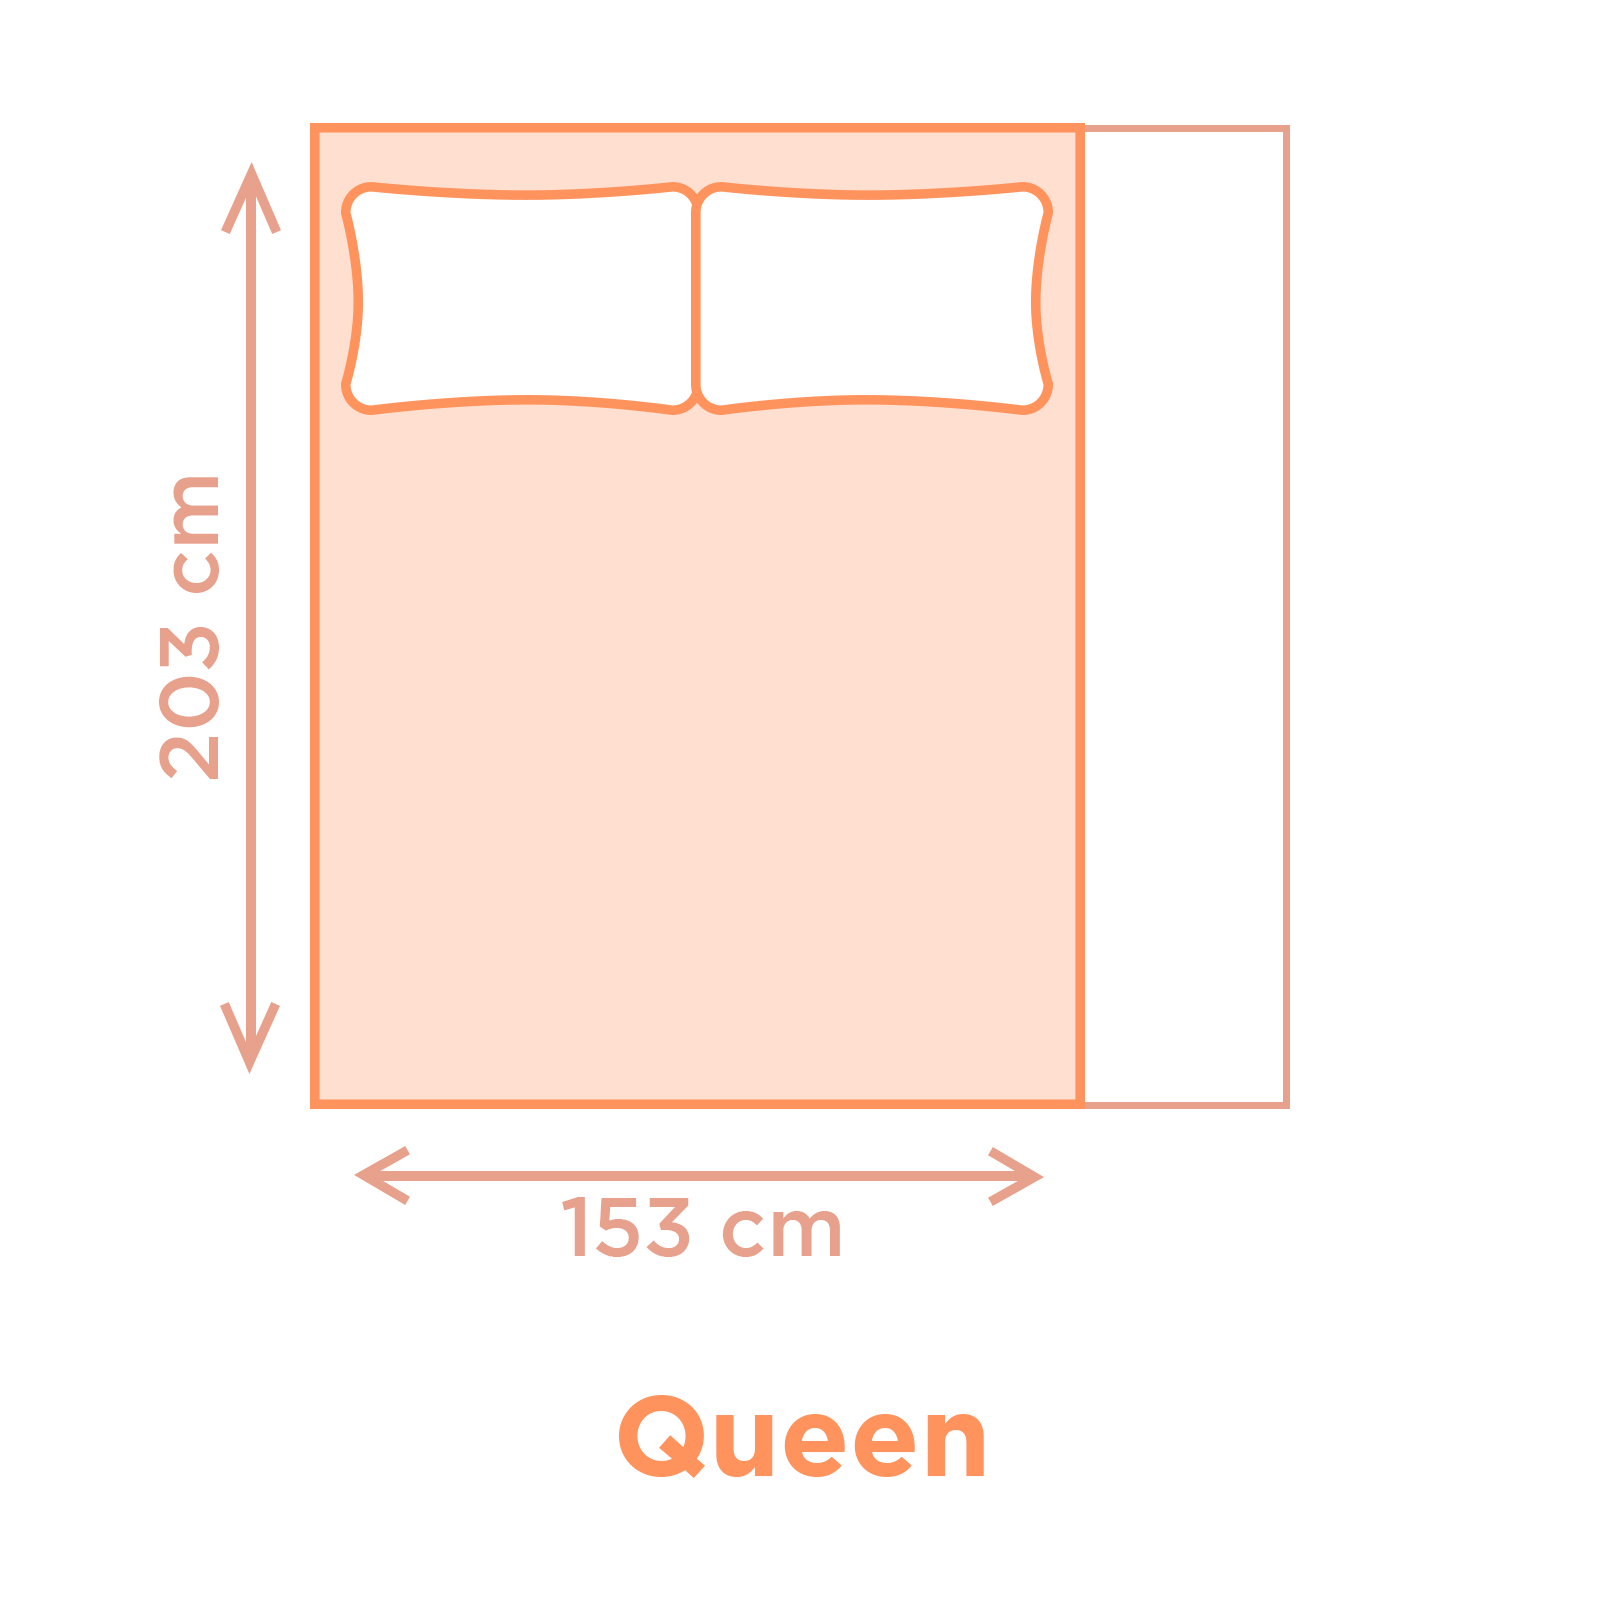 Queen Mattress Size & Dimensions in Australia